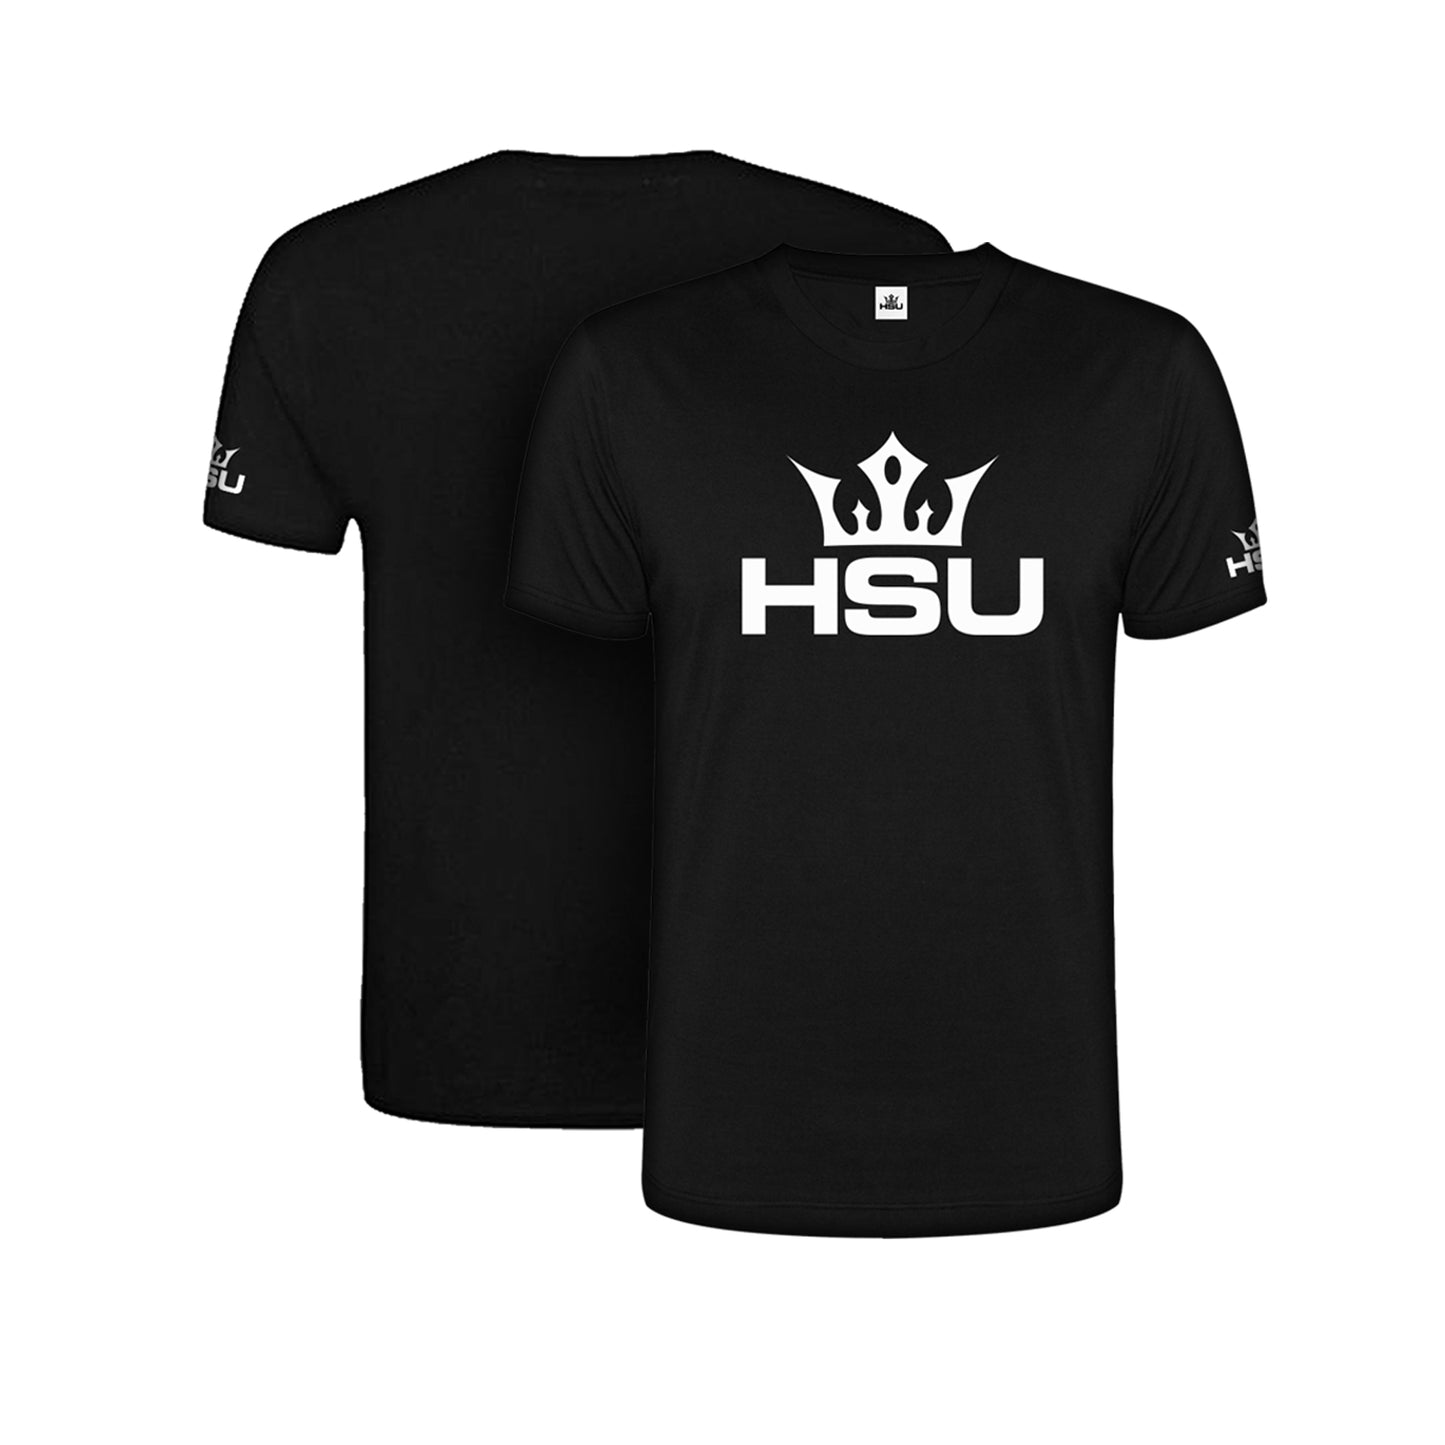 HSU Men's T-Shirt x Black